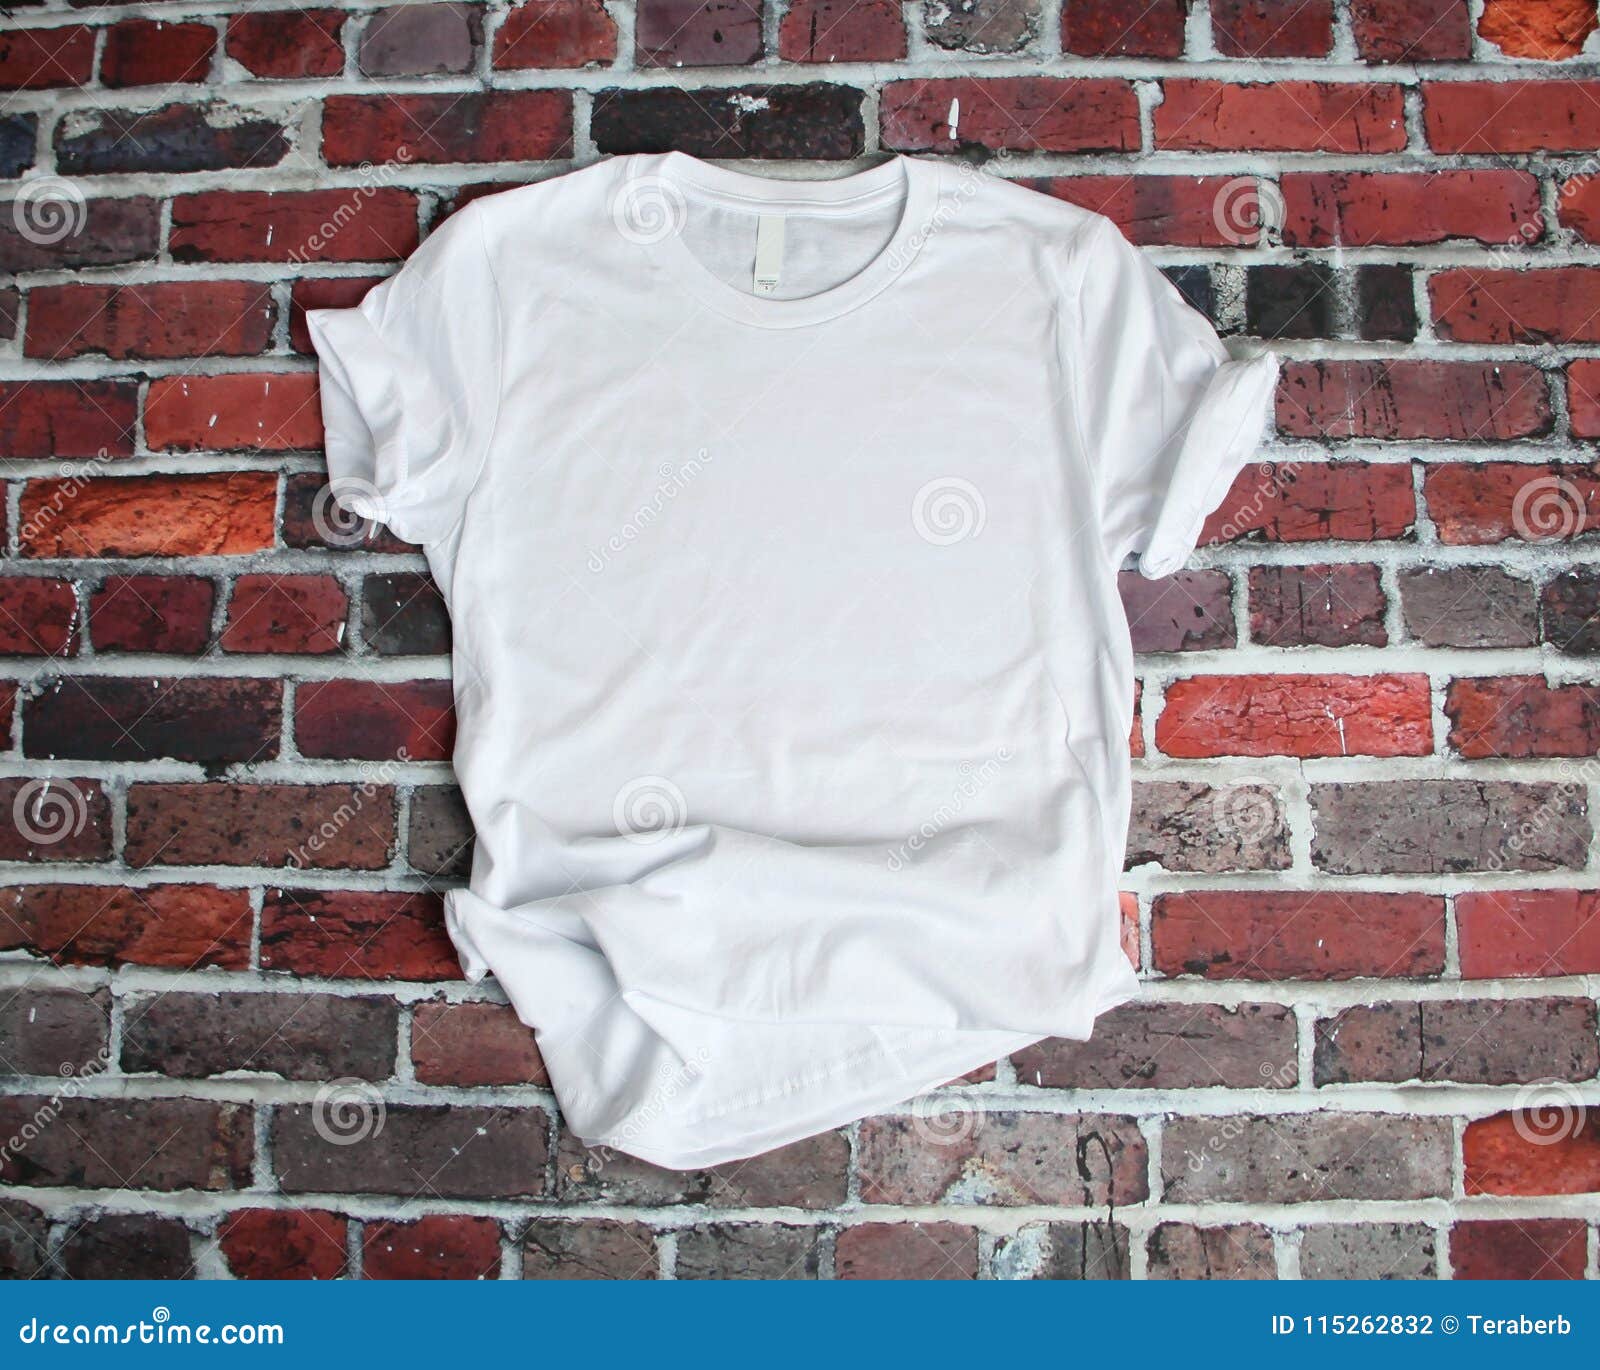 flat lay mockup of white tee shirt on brick background